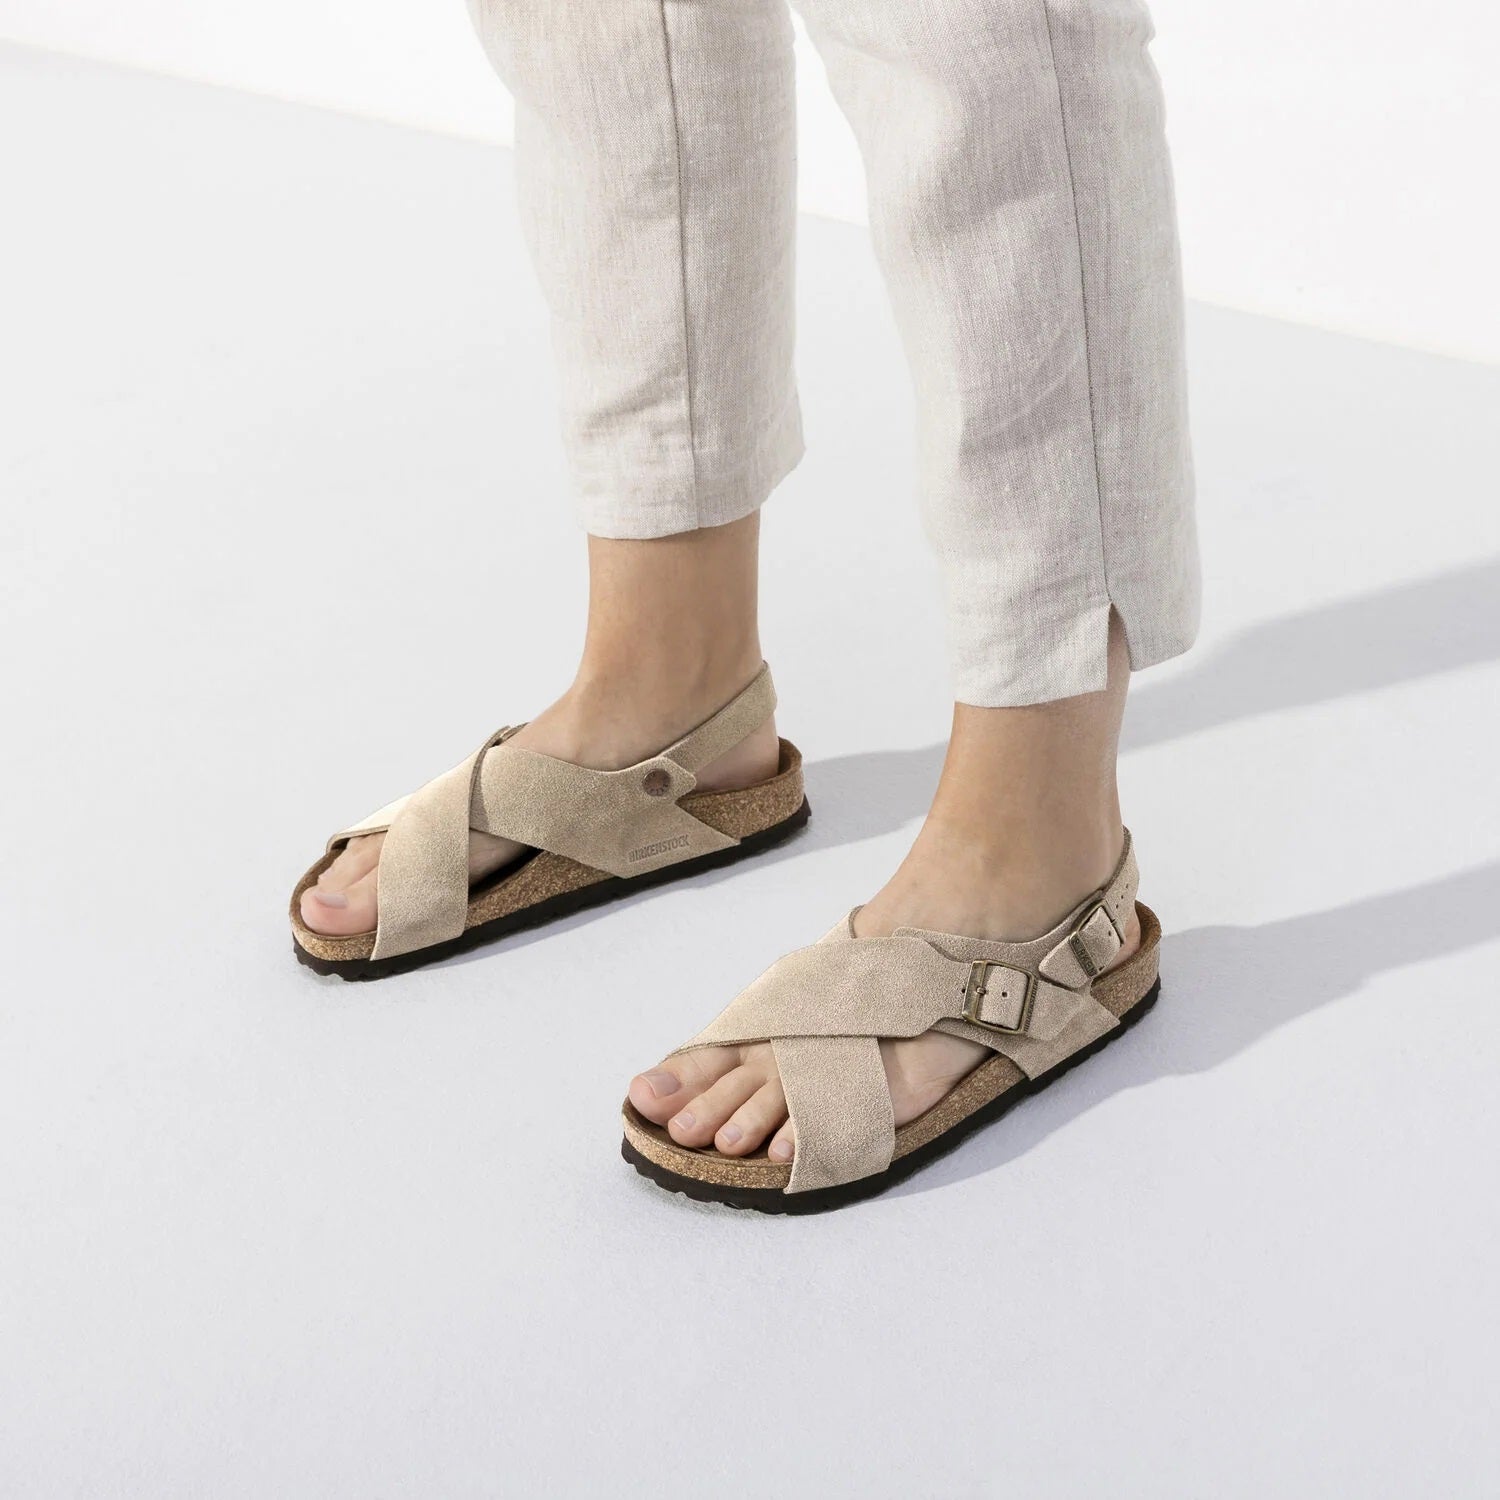 'Tulum' women's sandal - Taupe - Chaplinshoes'Tulum' women's sandal - TaupeBirkenstock